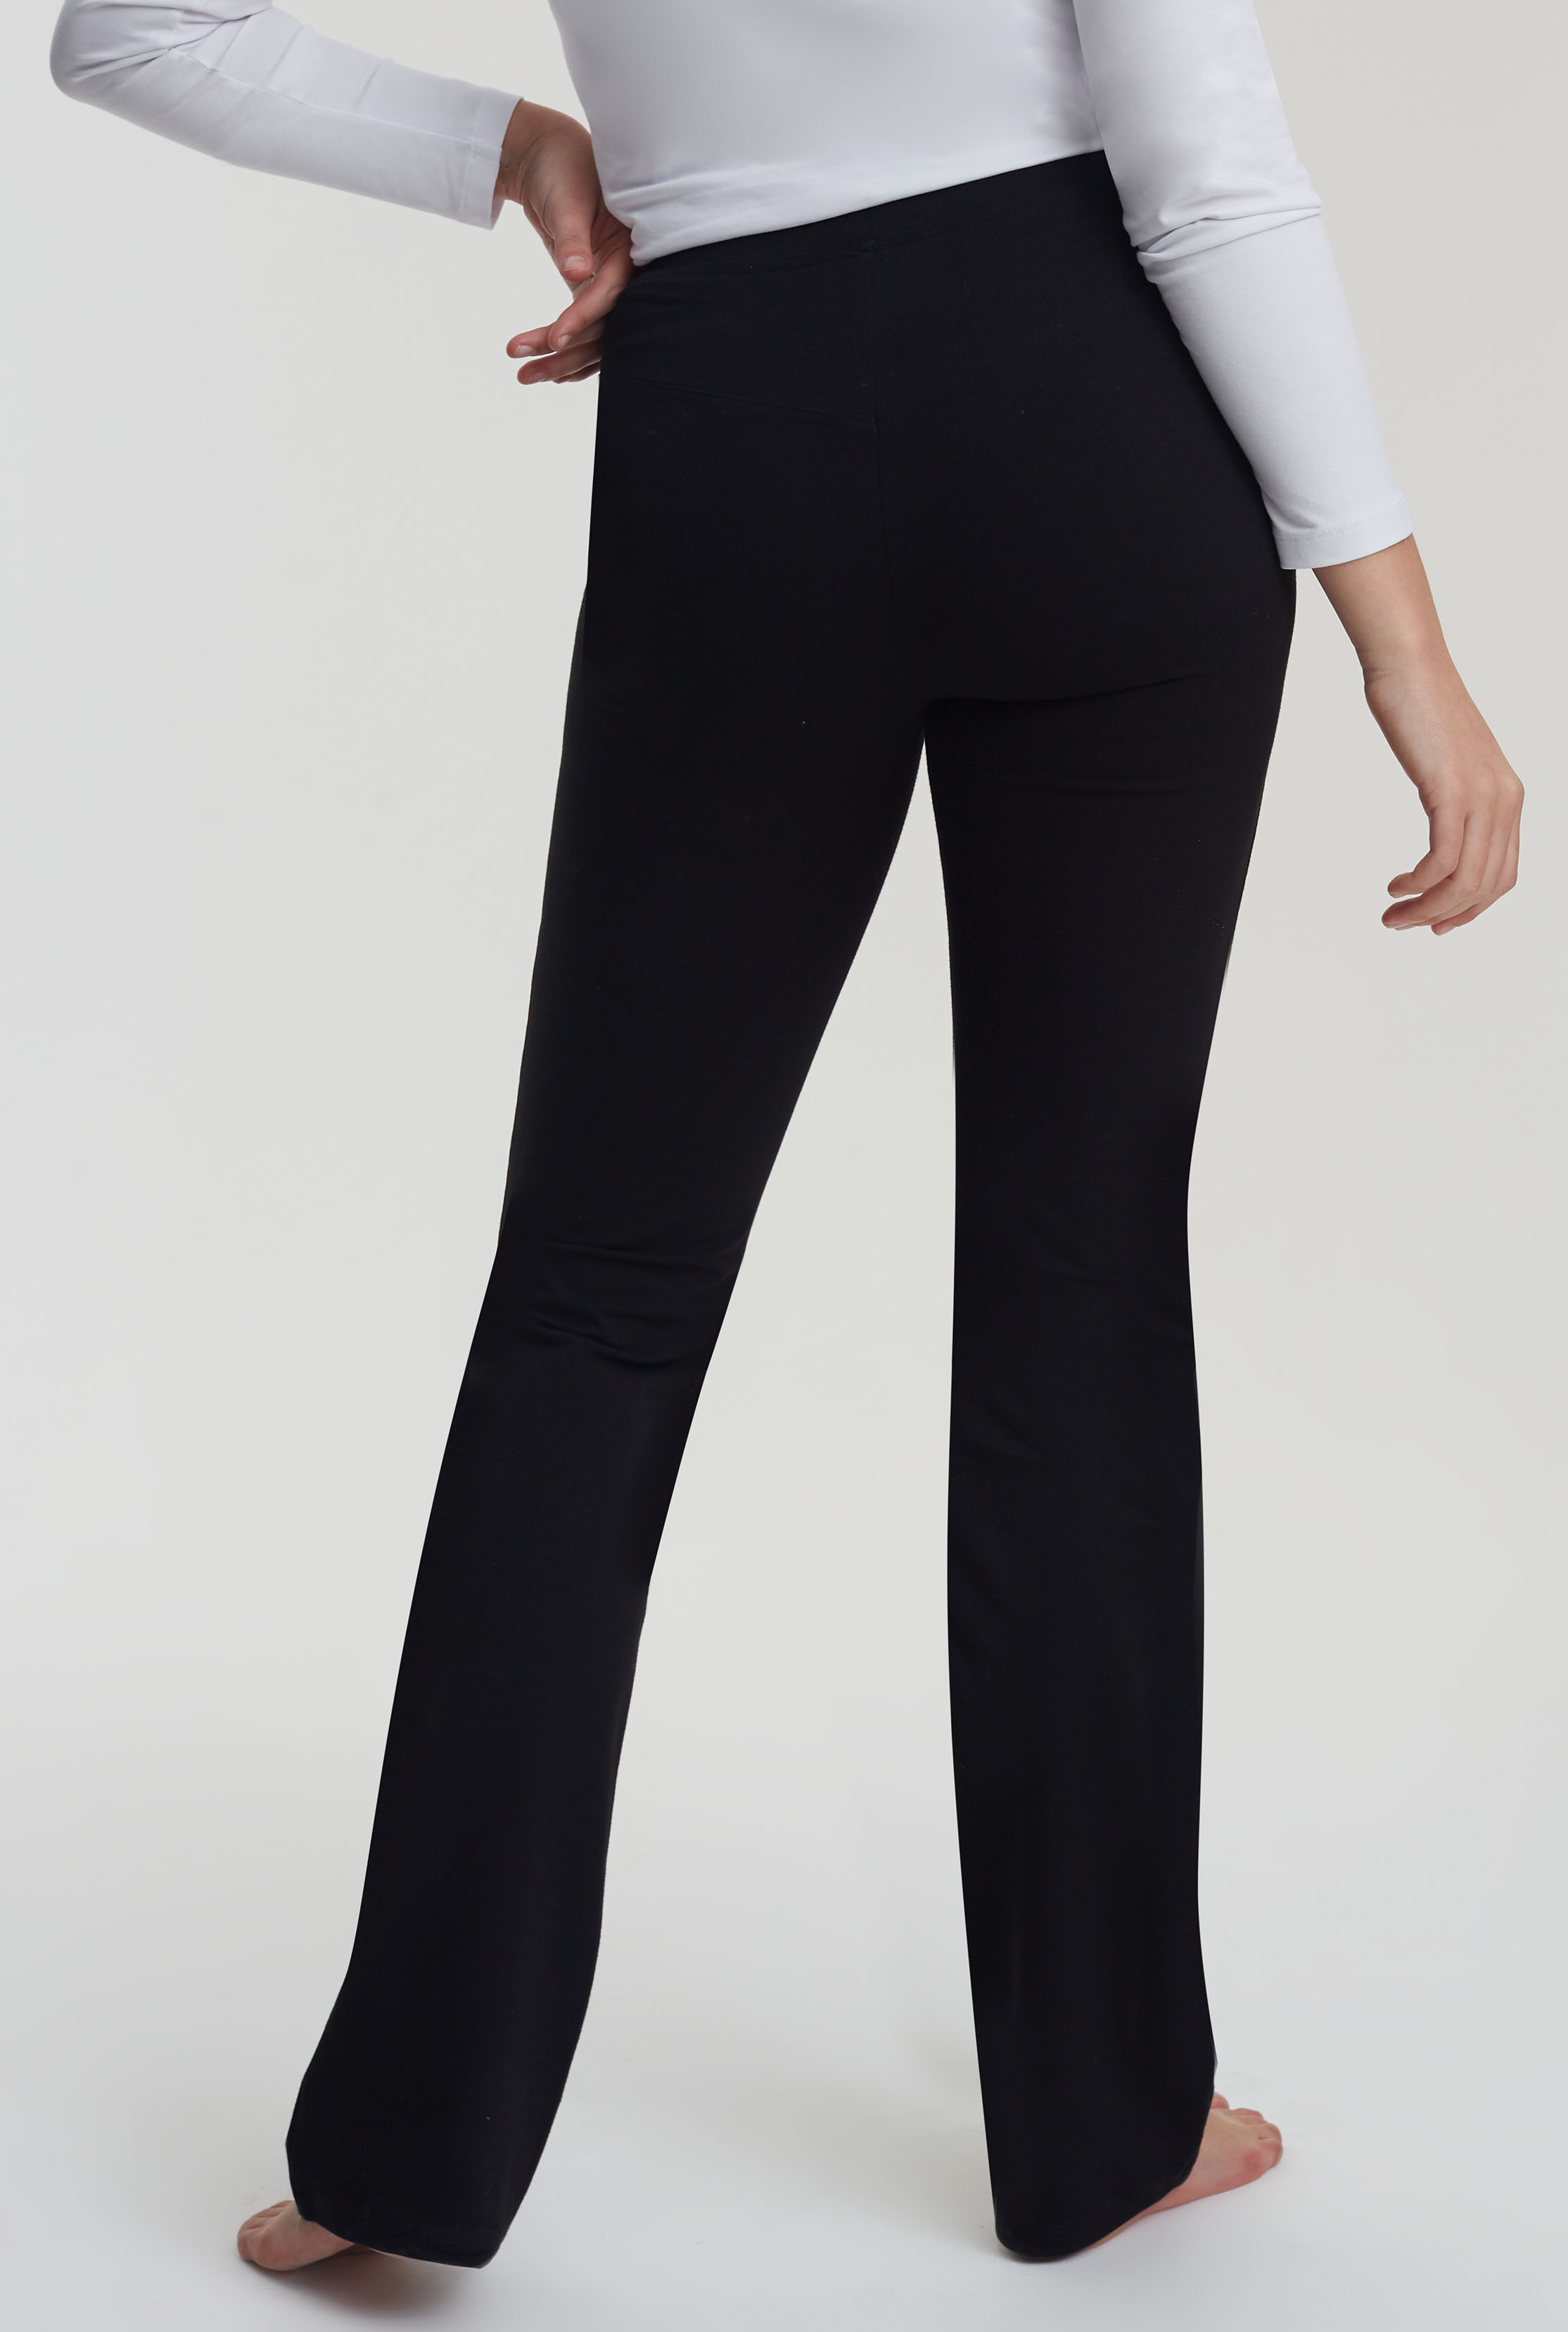 Black Slim Leg Yoga Pants with Zip Pocket | Long Tall Sally